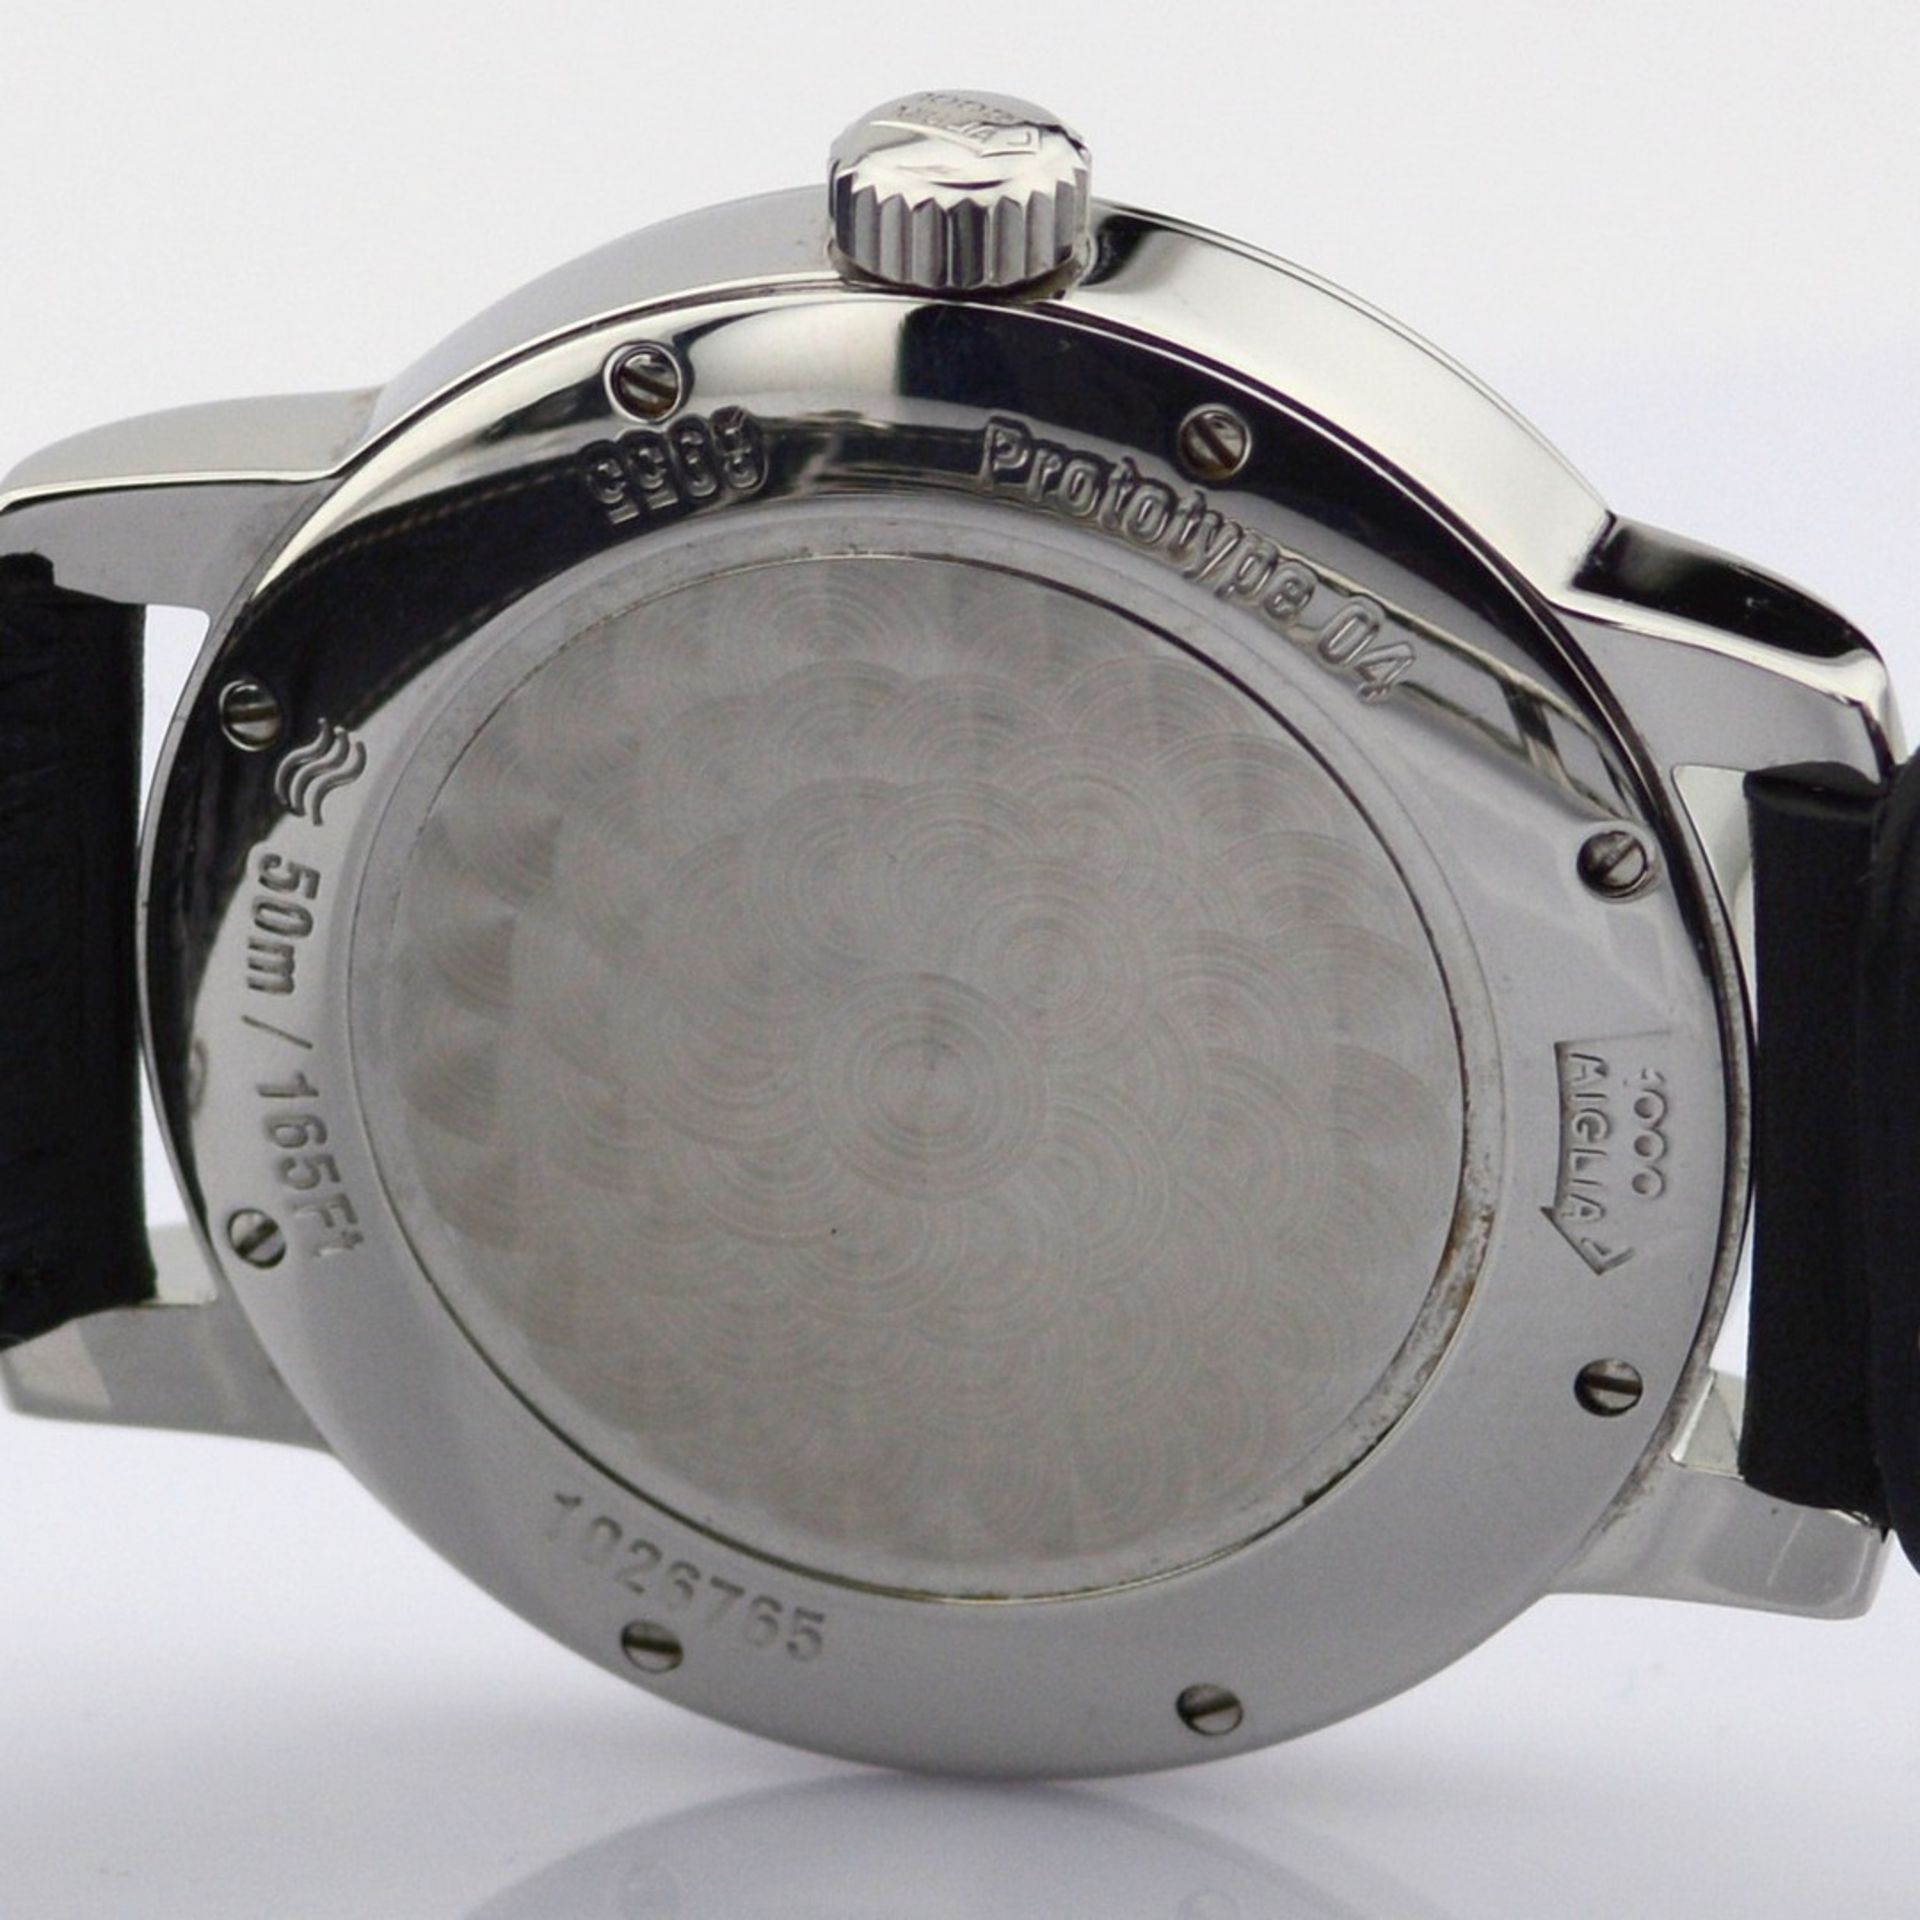 Chopard / 1000 Miglia Grand Turismo Prototype - Gentlemen's Steel Wristwatch - Image 7 of 8